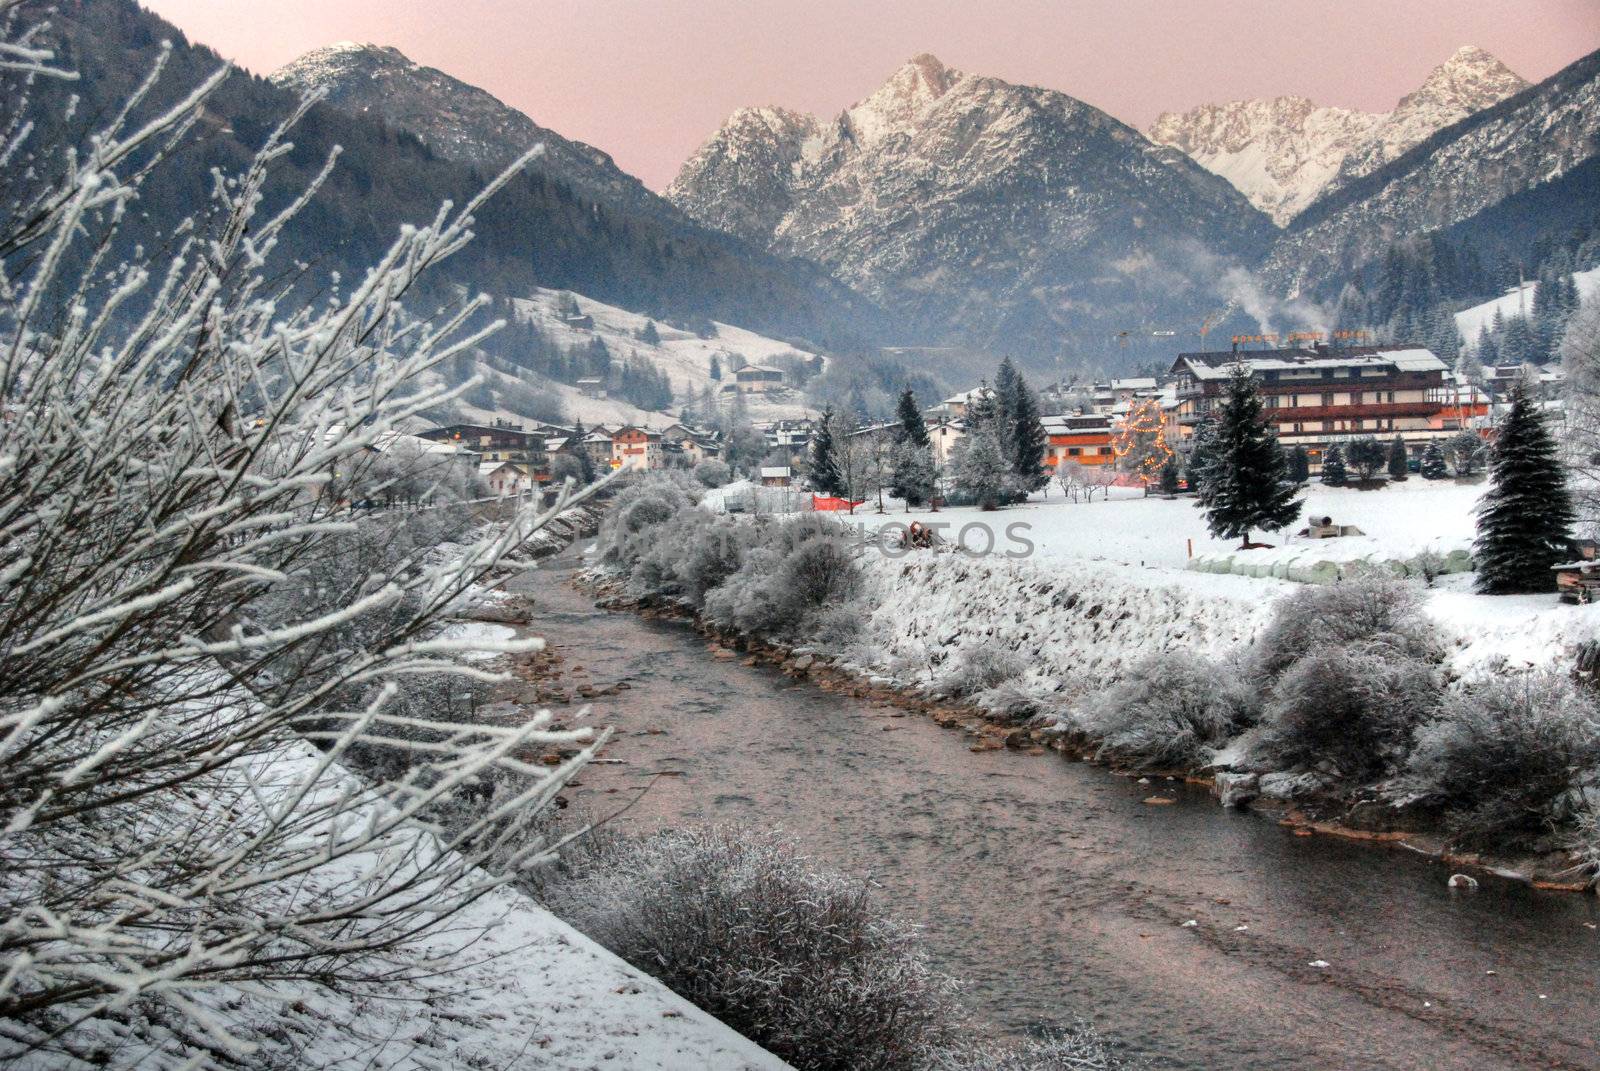 Dolomites Winter, Italy by jovannig